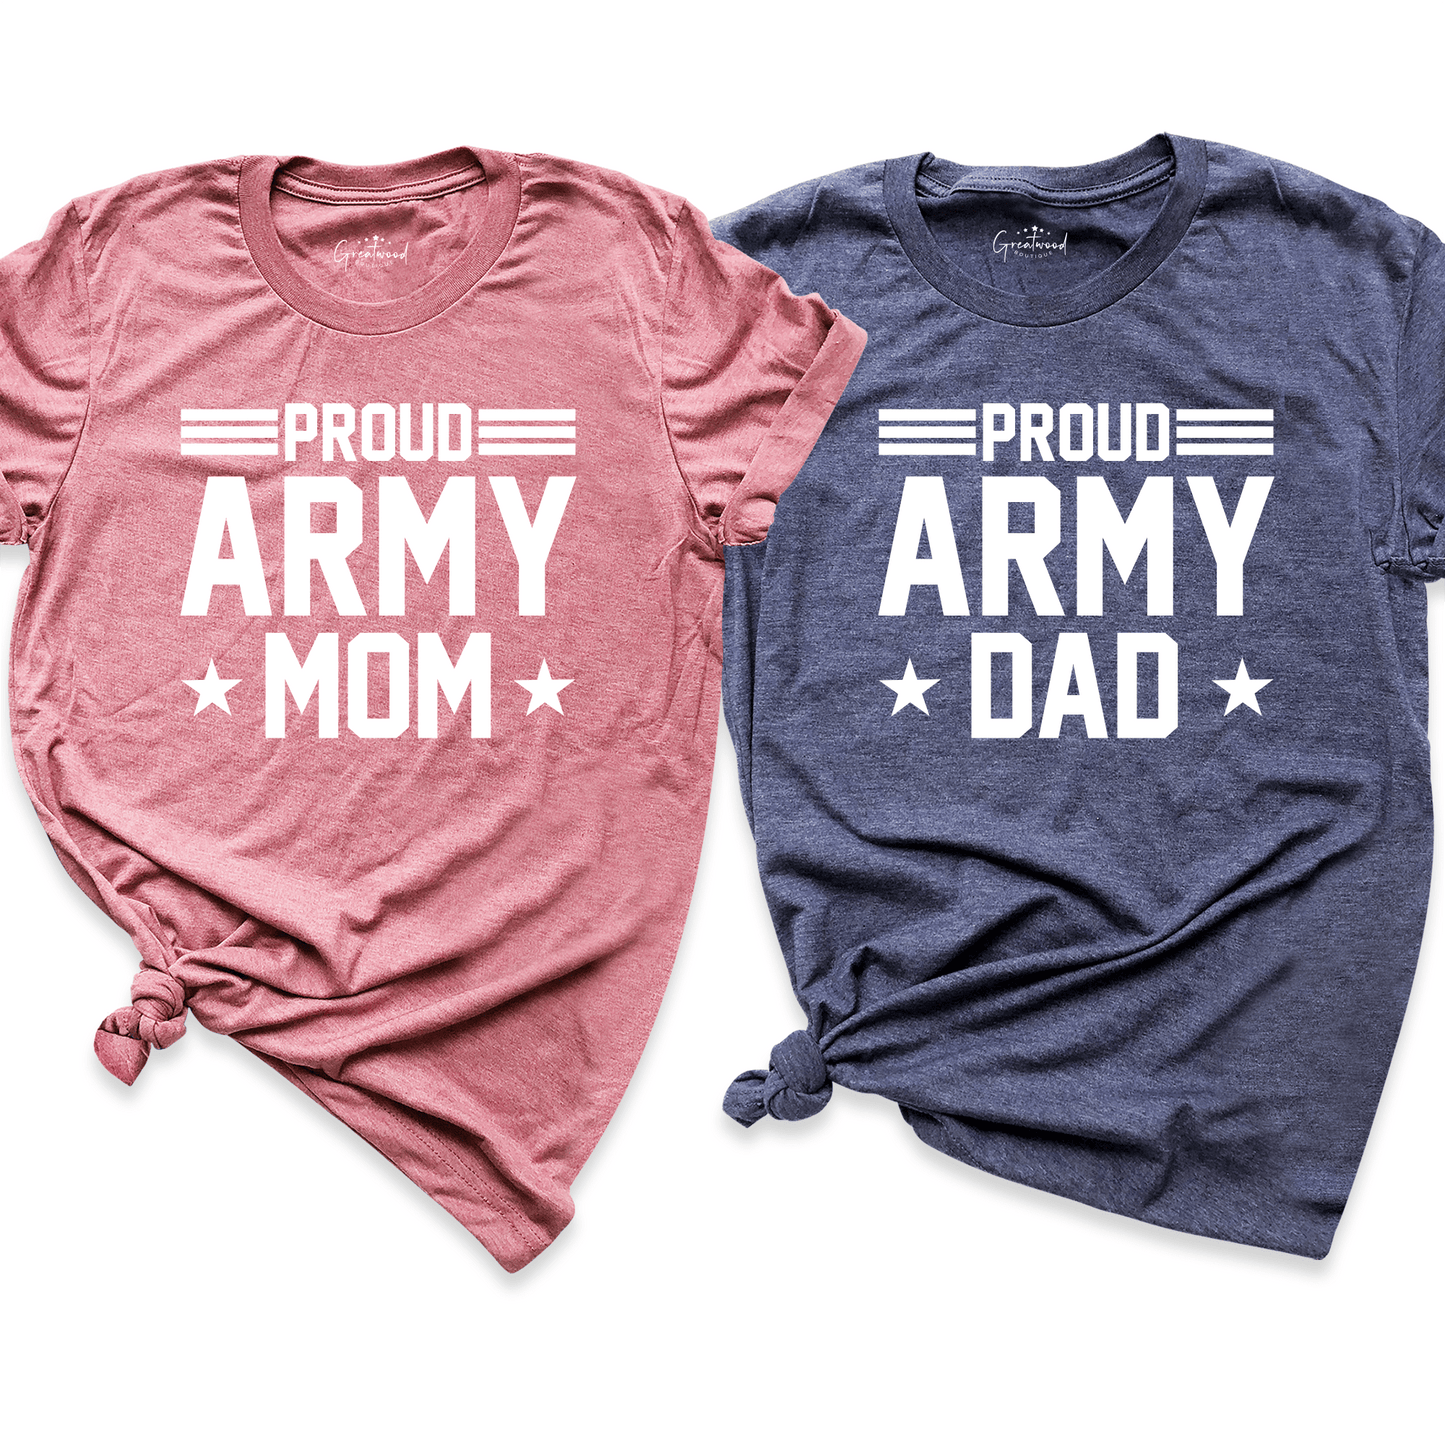 Proud Army Mom & Dad Shirt